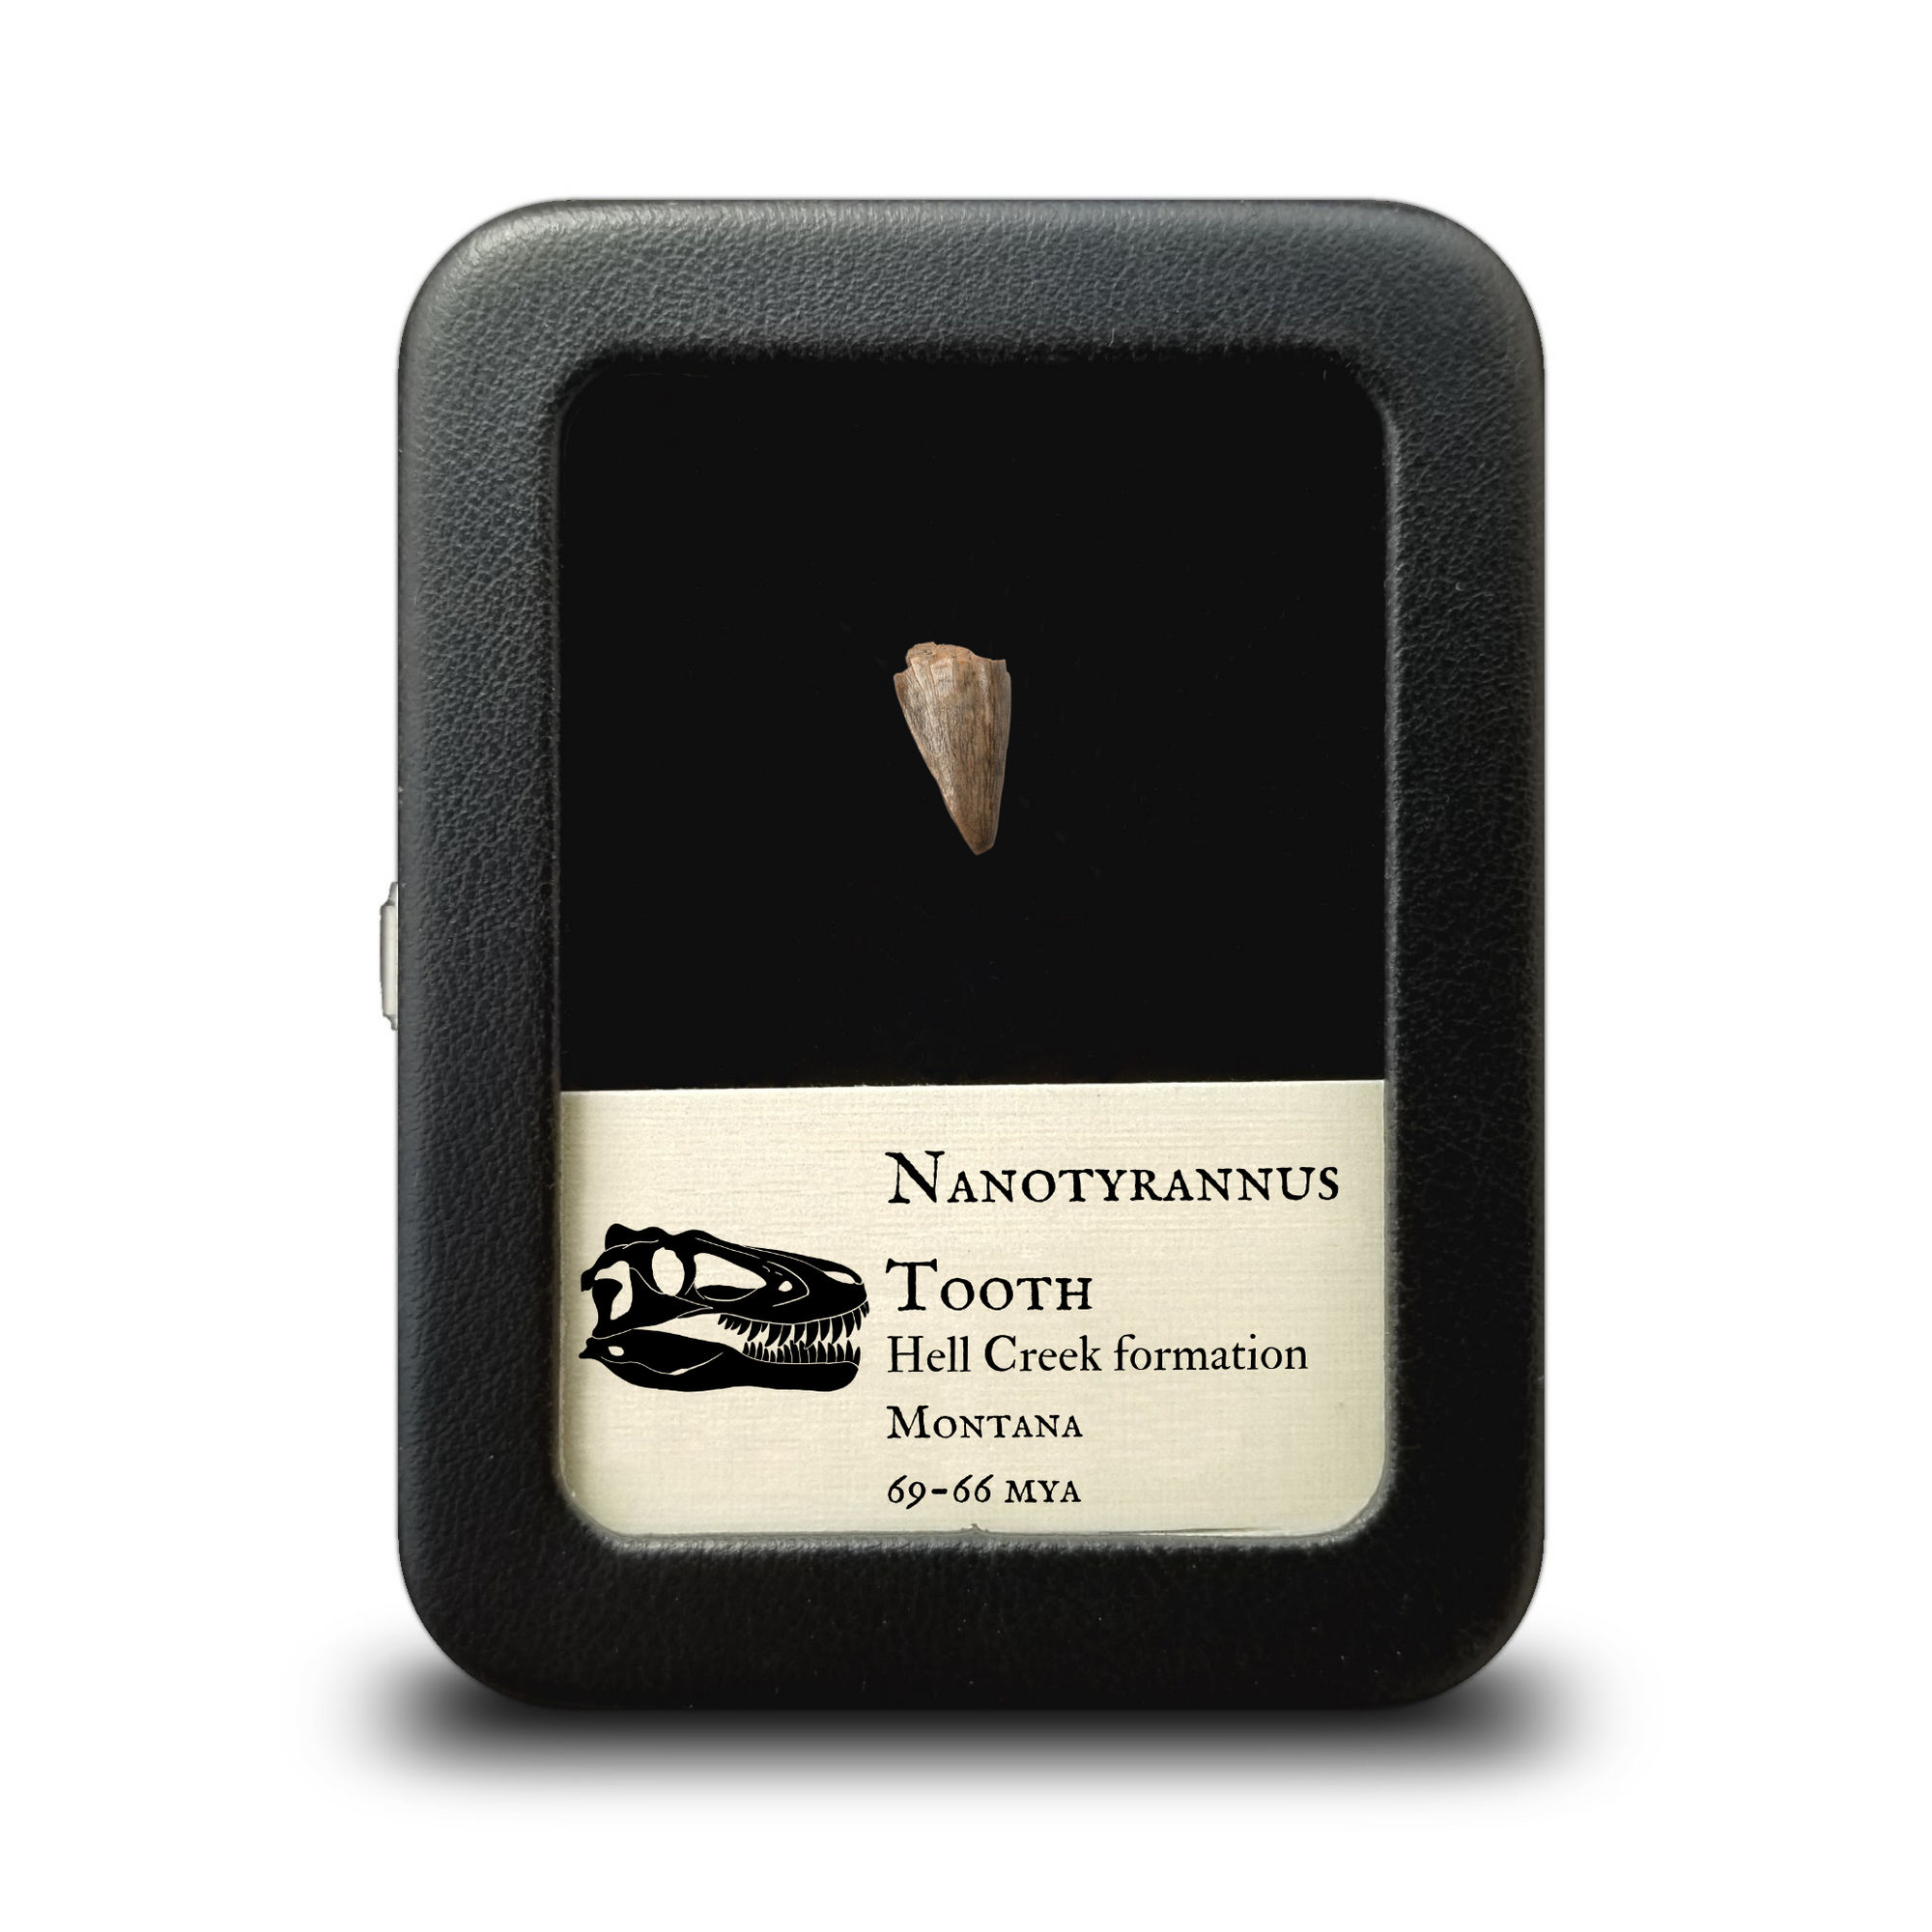 Nanotyrannus Tooth,  18 mm long - Cretaceous Period - 68 to 66 MYA - Montana, USA